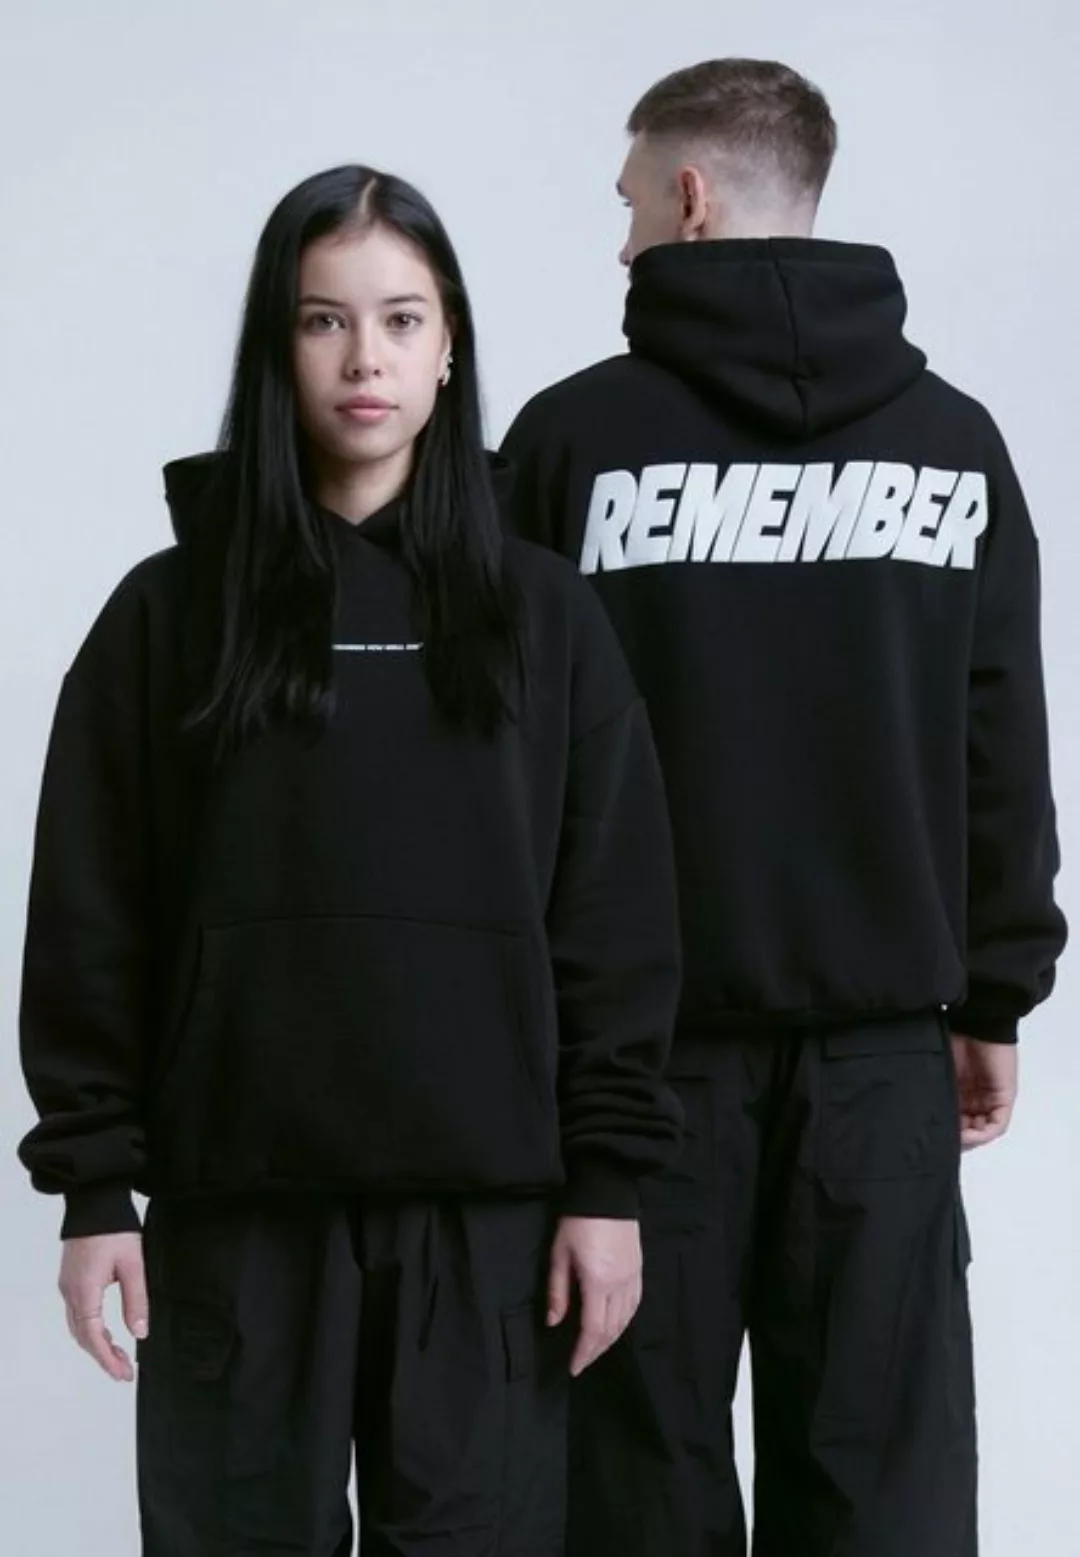 Remember you will die - RYWD Kapuzensweatshirt Remember Hoodie günstig online kaufen